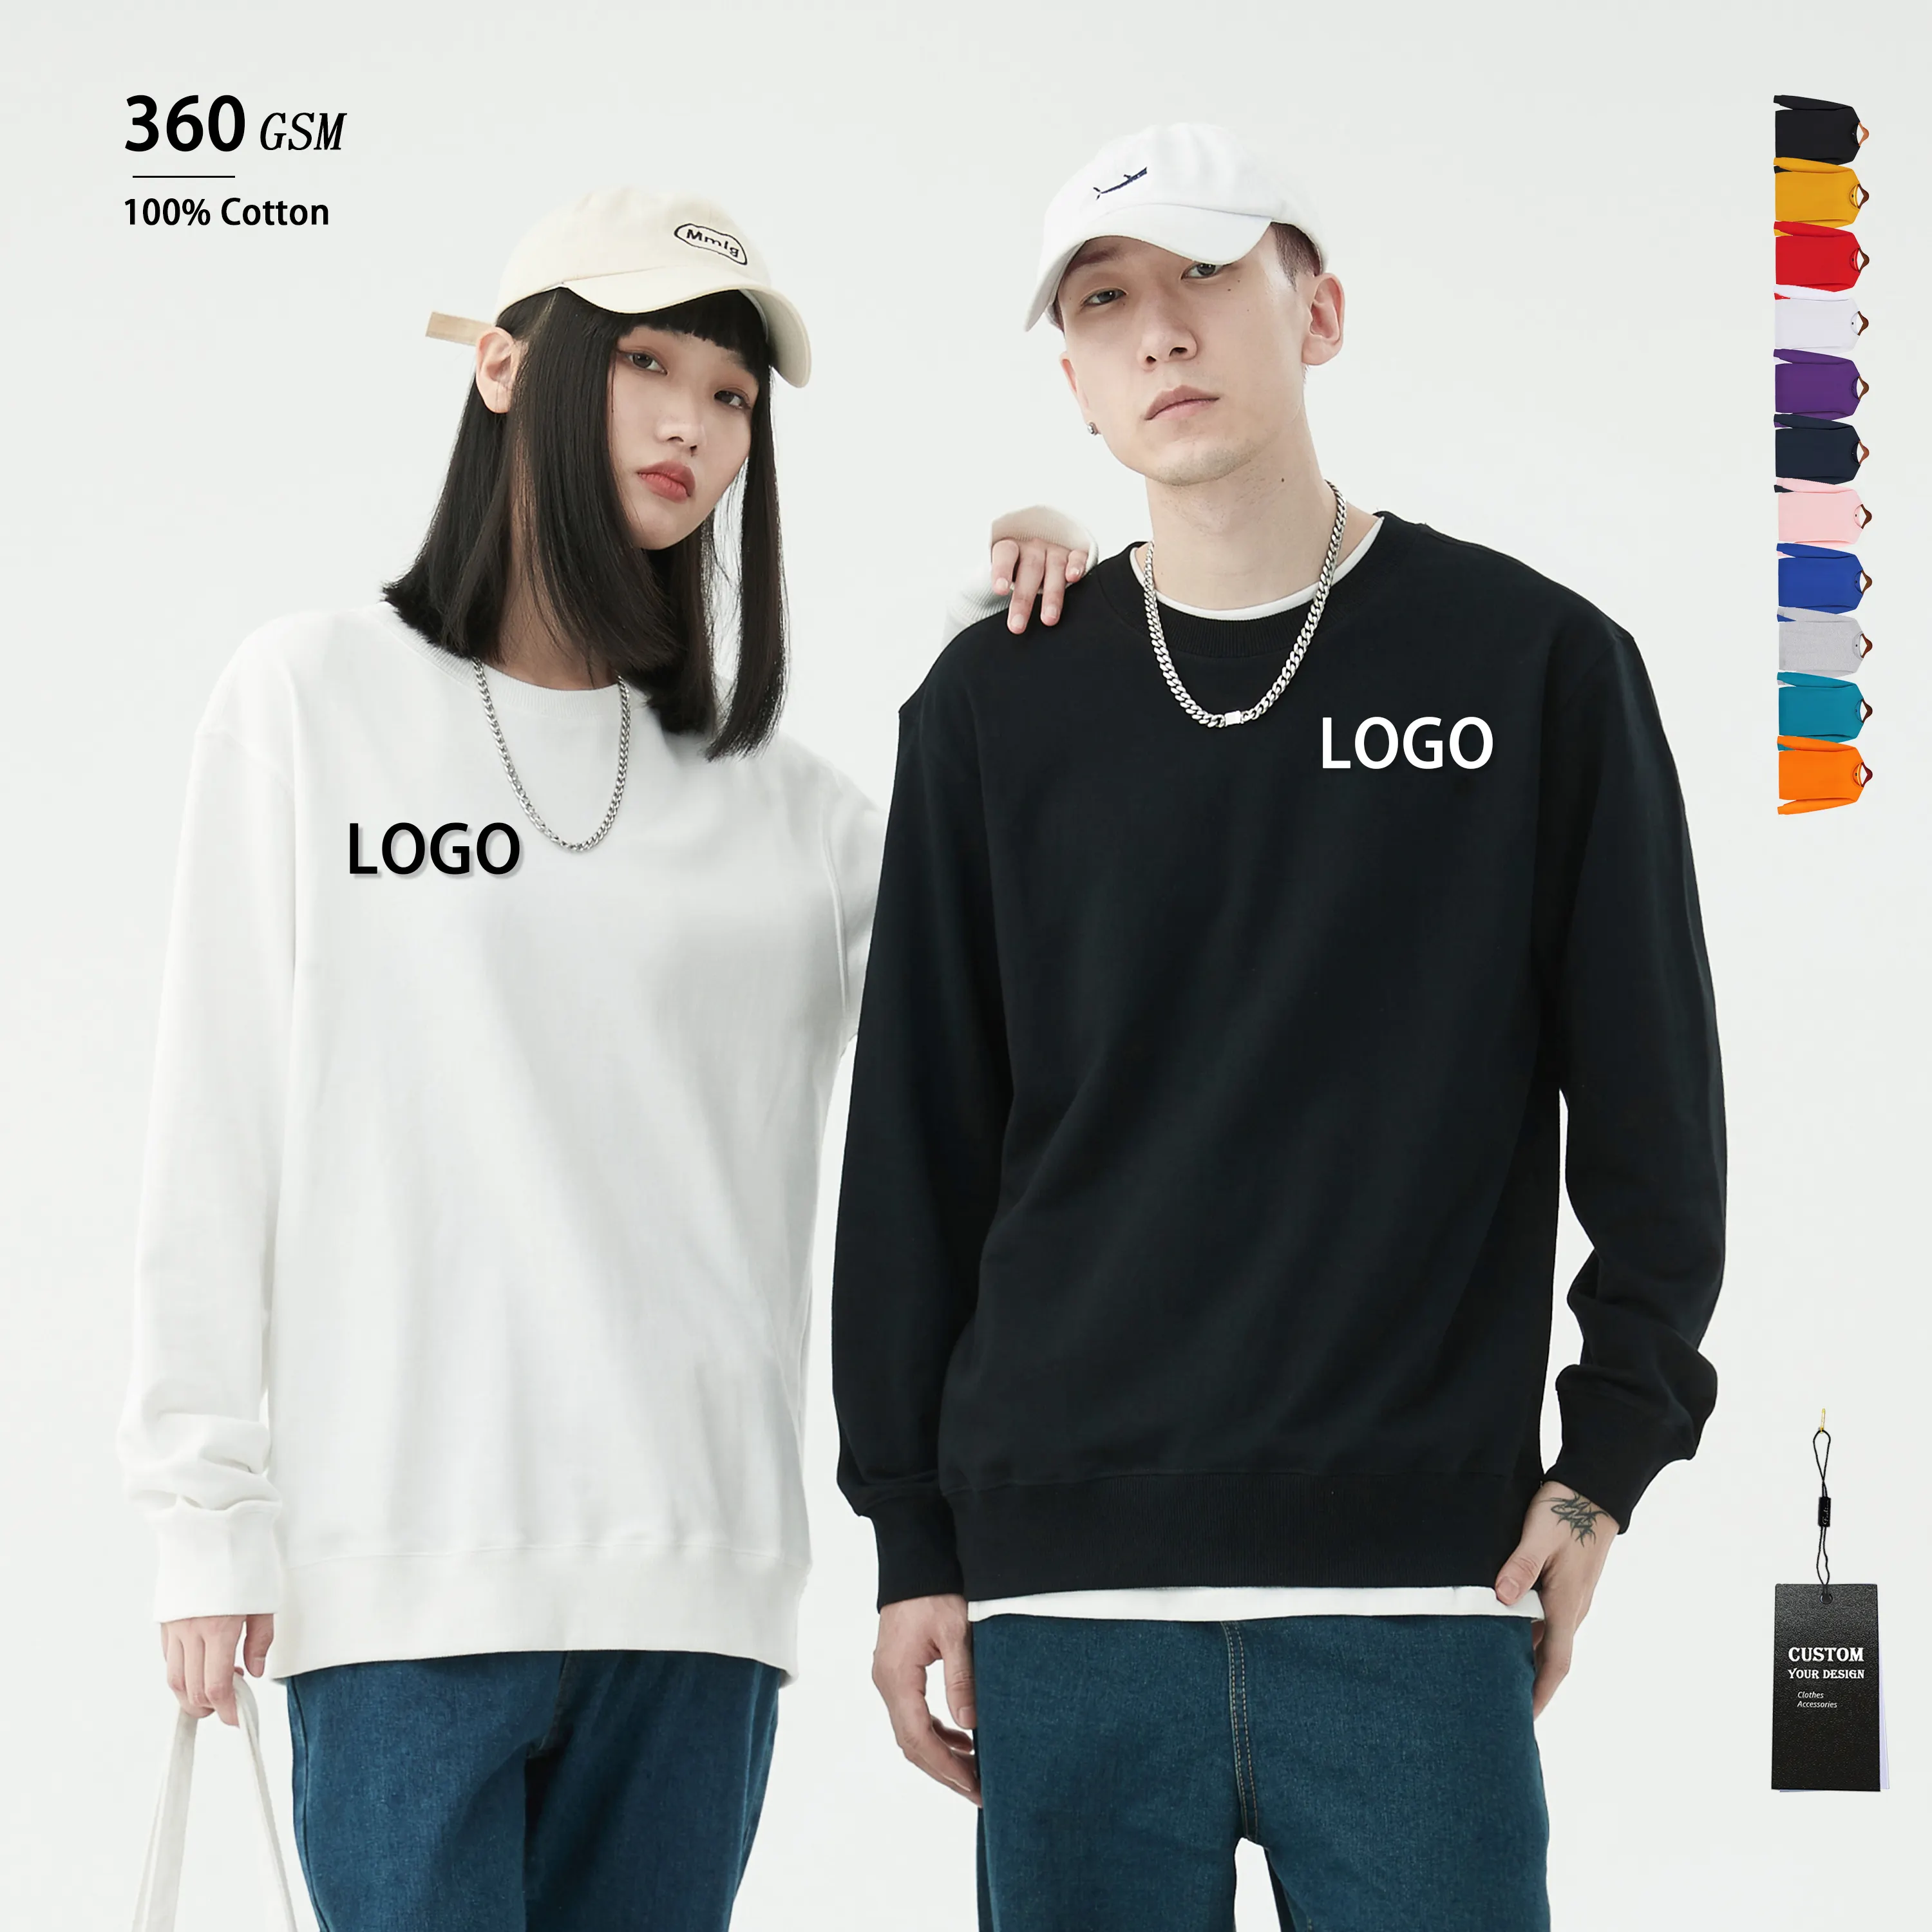 2023 New Fashion 360g 100% Cotton Custom Embroidery High Quality Crew Neck Cotton White Blank Men's Trendy Sweatshirts